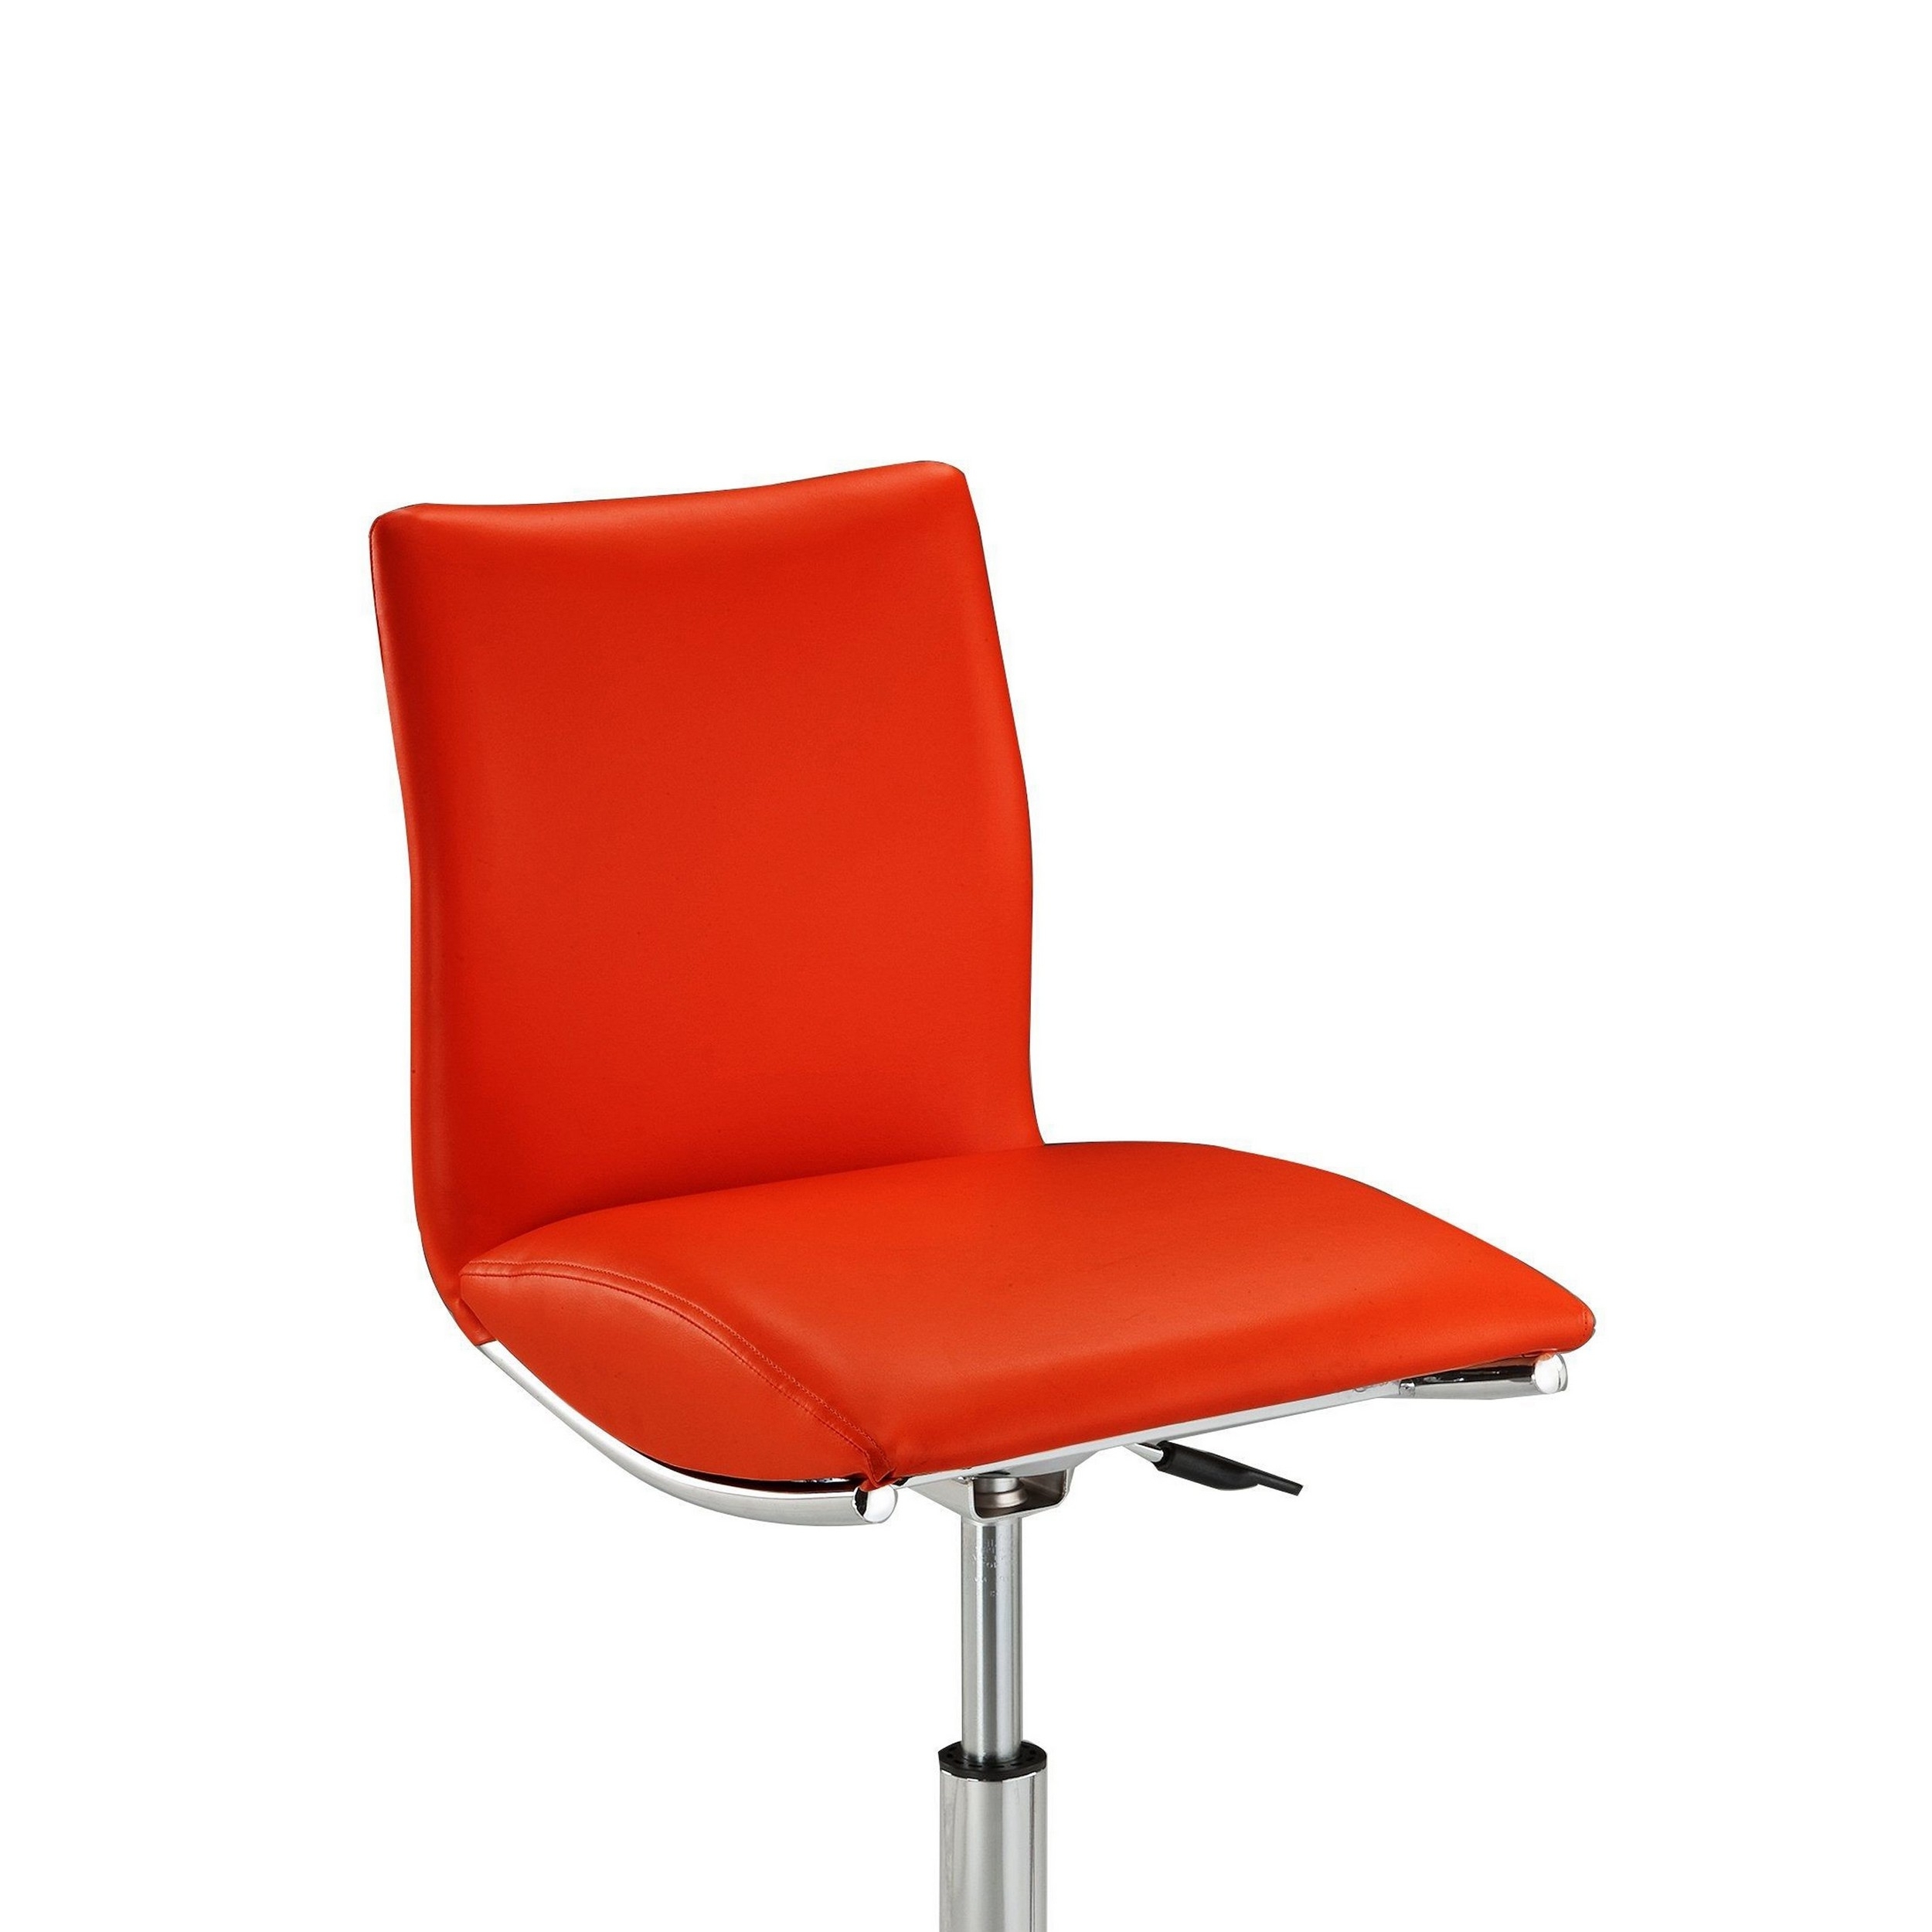 Deko 26-31 Inch Adjustable Height Barstool Chair, Set Of 2, Chrome, Red Faux Leather - Saltoro Sherpi